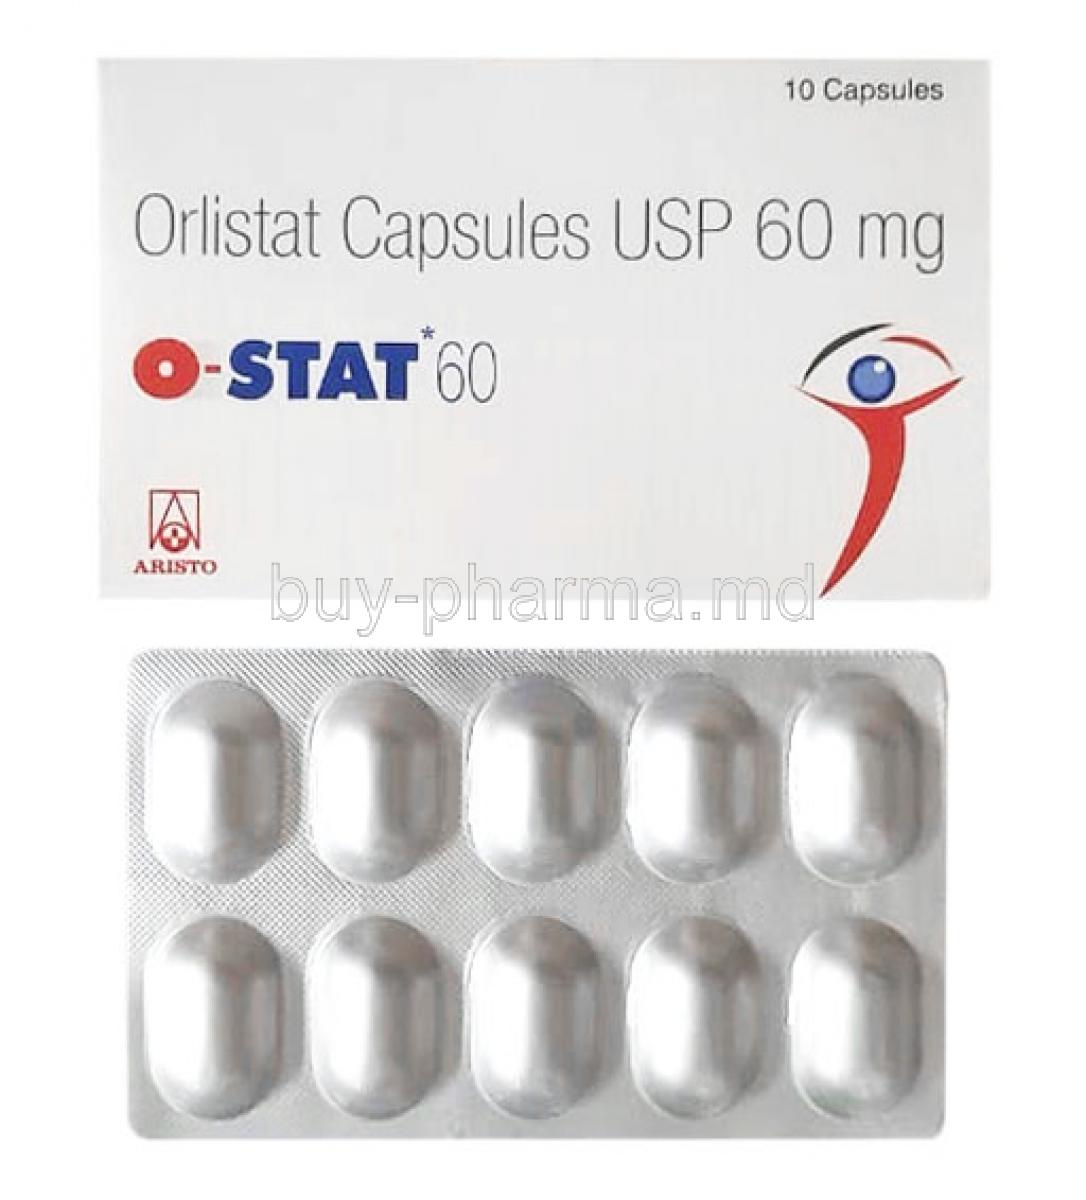 O-Stat 60, Orlistat 60mg, Aristo Pharmaceuticals, Box, Blisterpack